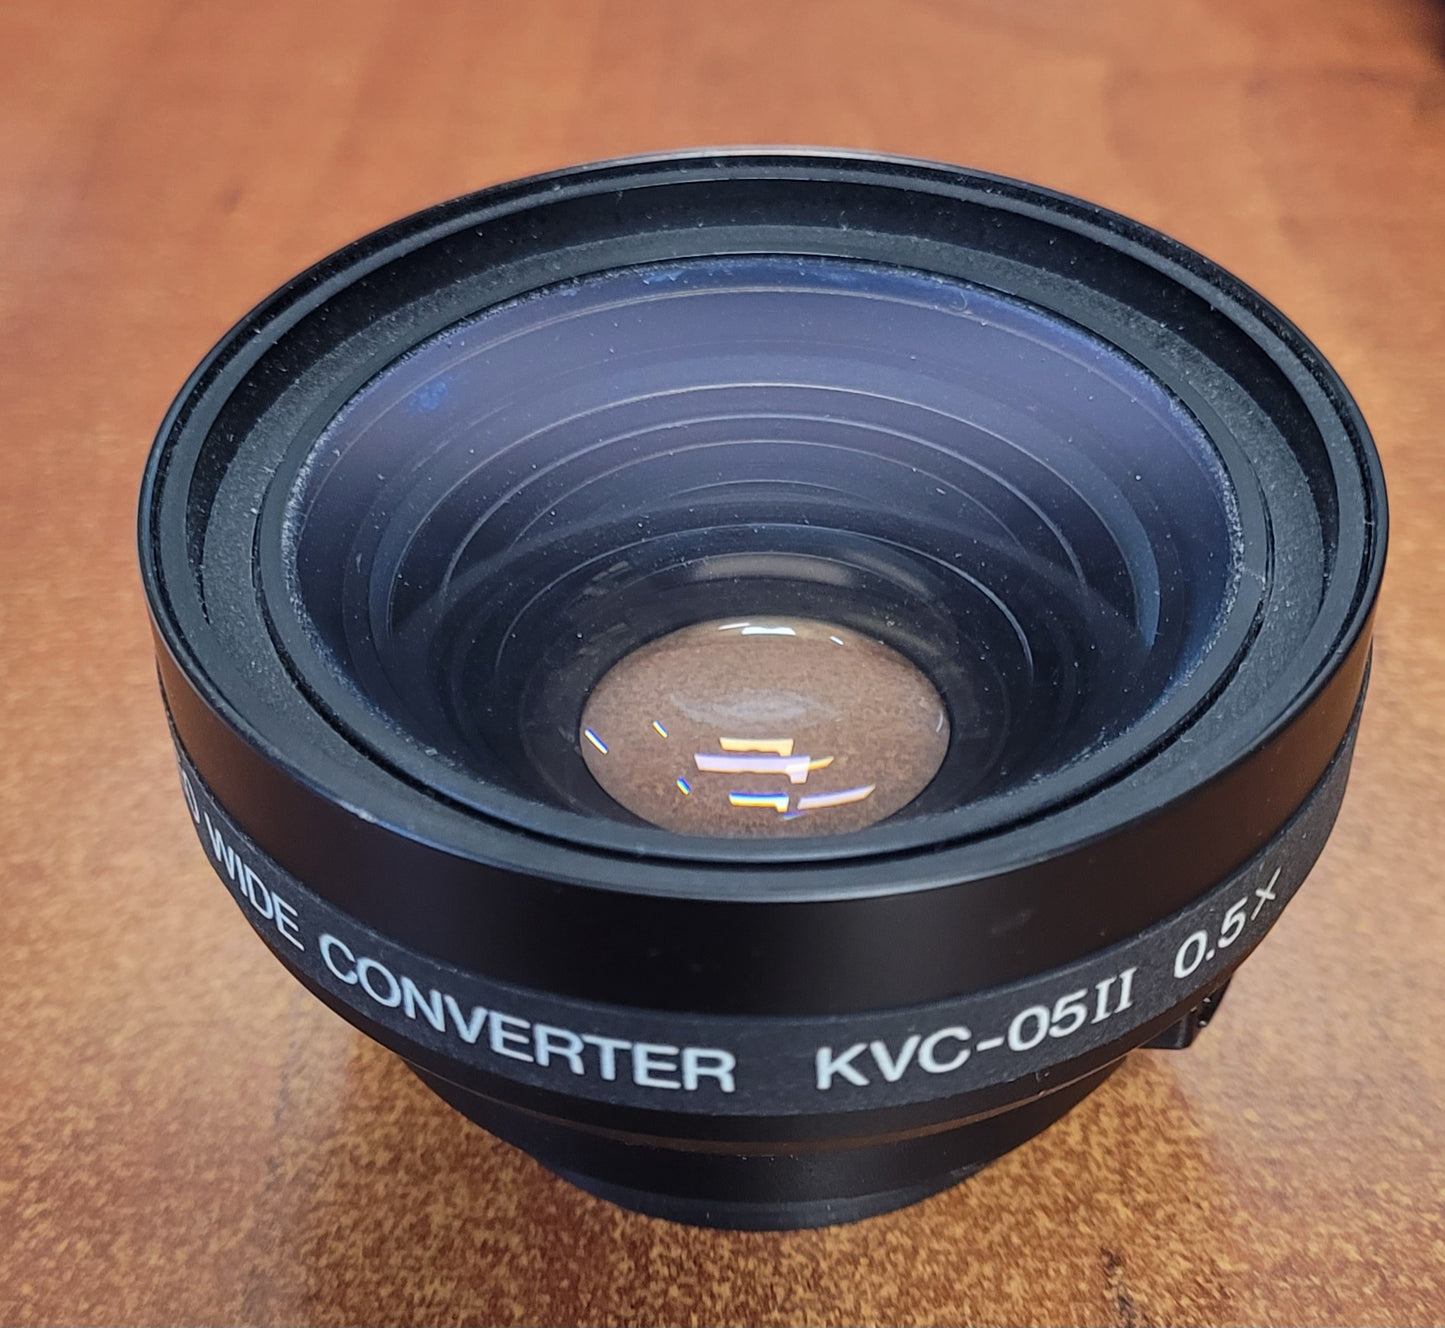 Kenko KVC-05II Wide Angle Converter 0.5x